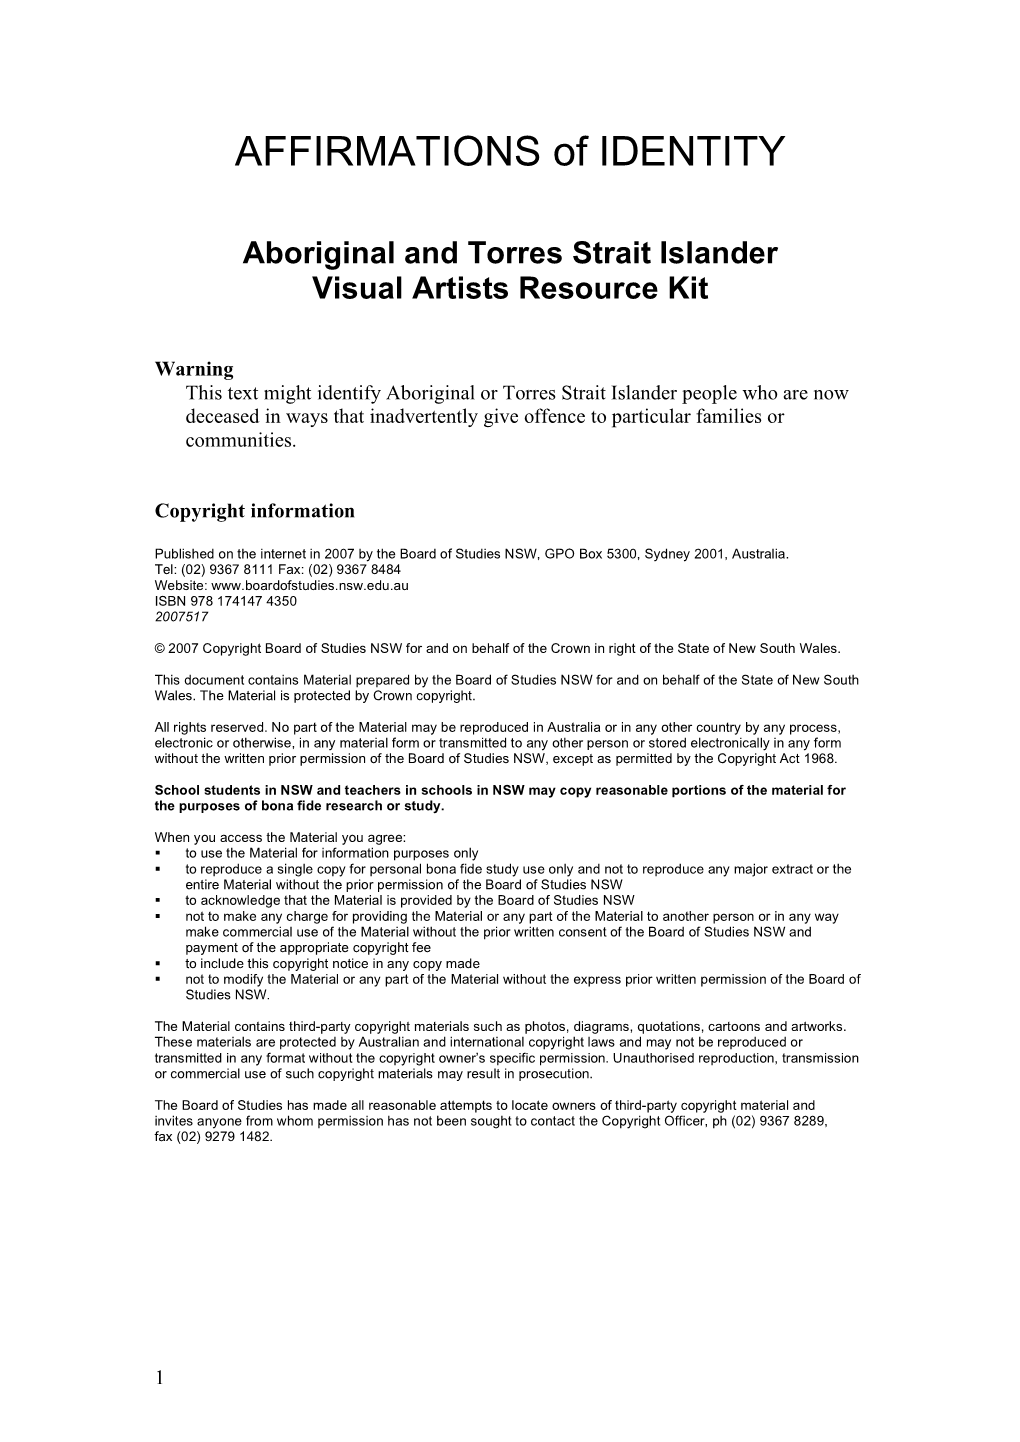 Aboriginal and Torres Strait Islander Visual Artists Resource Kit